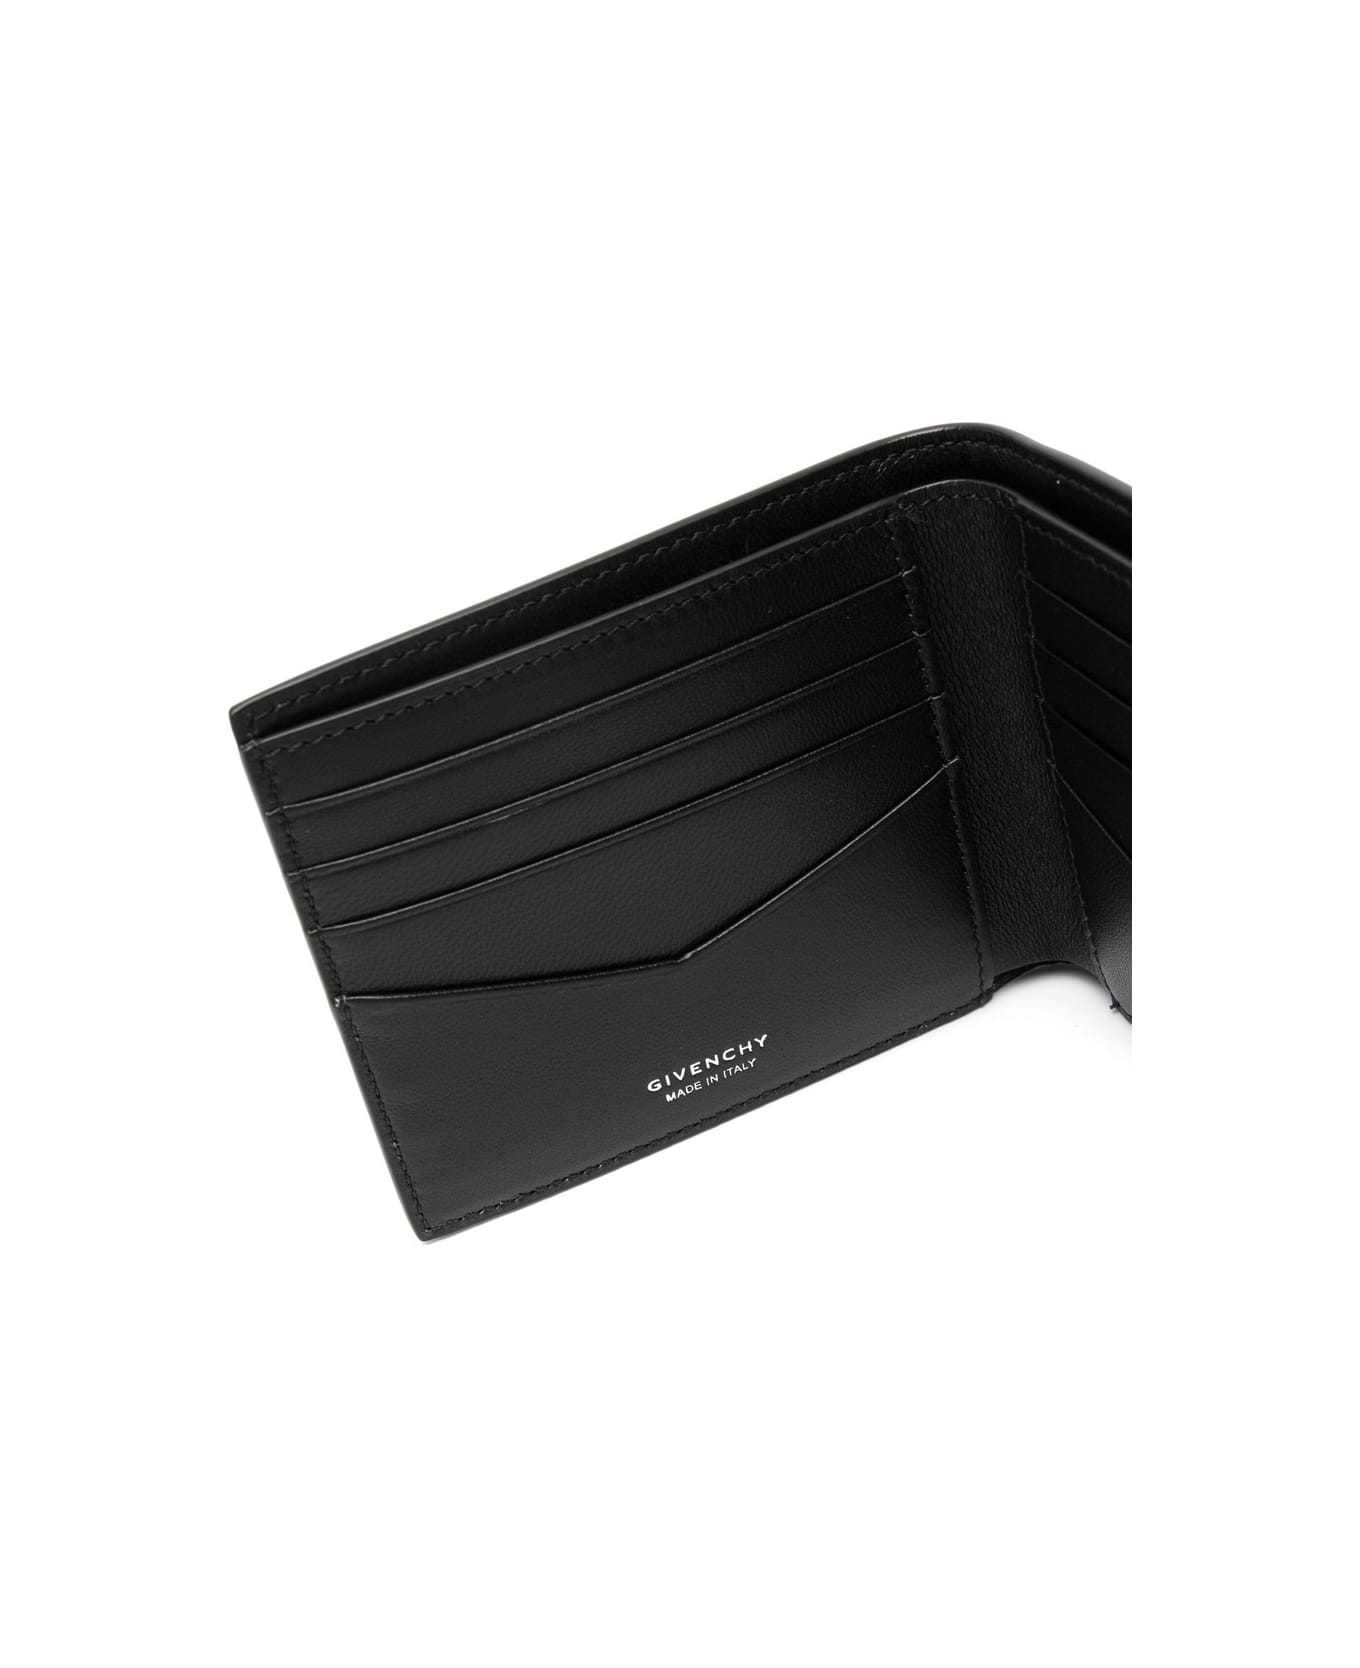 Givenchy Wallet In Black 4g Nylon - Black